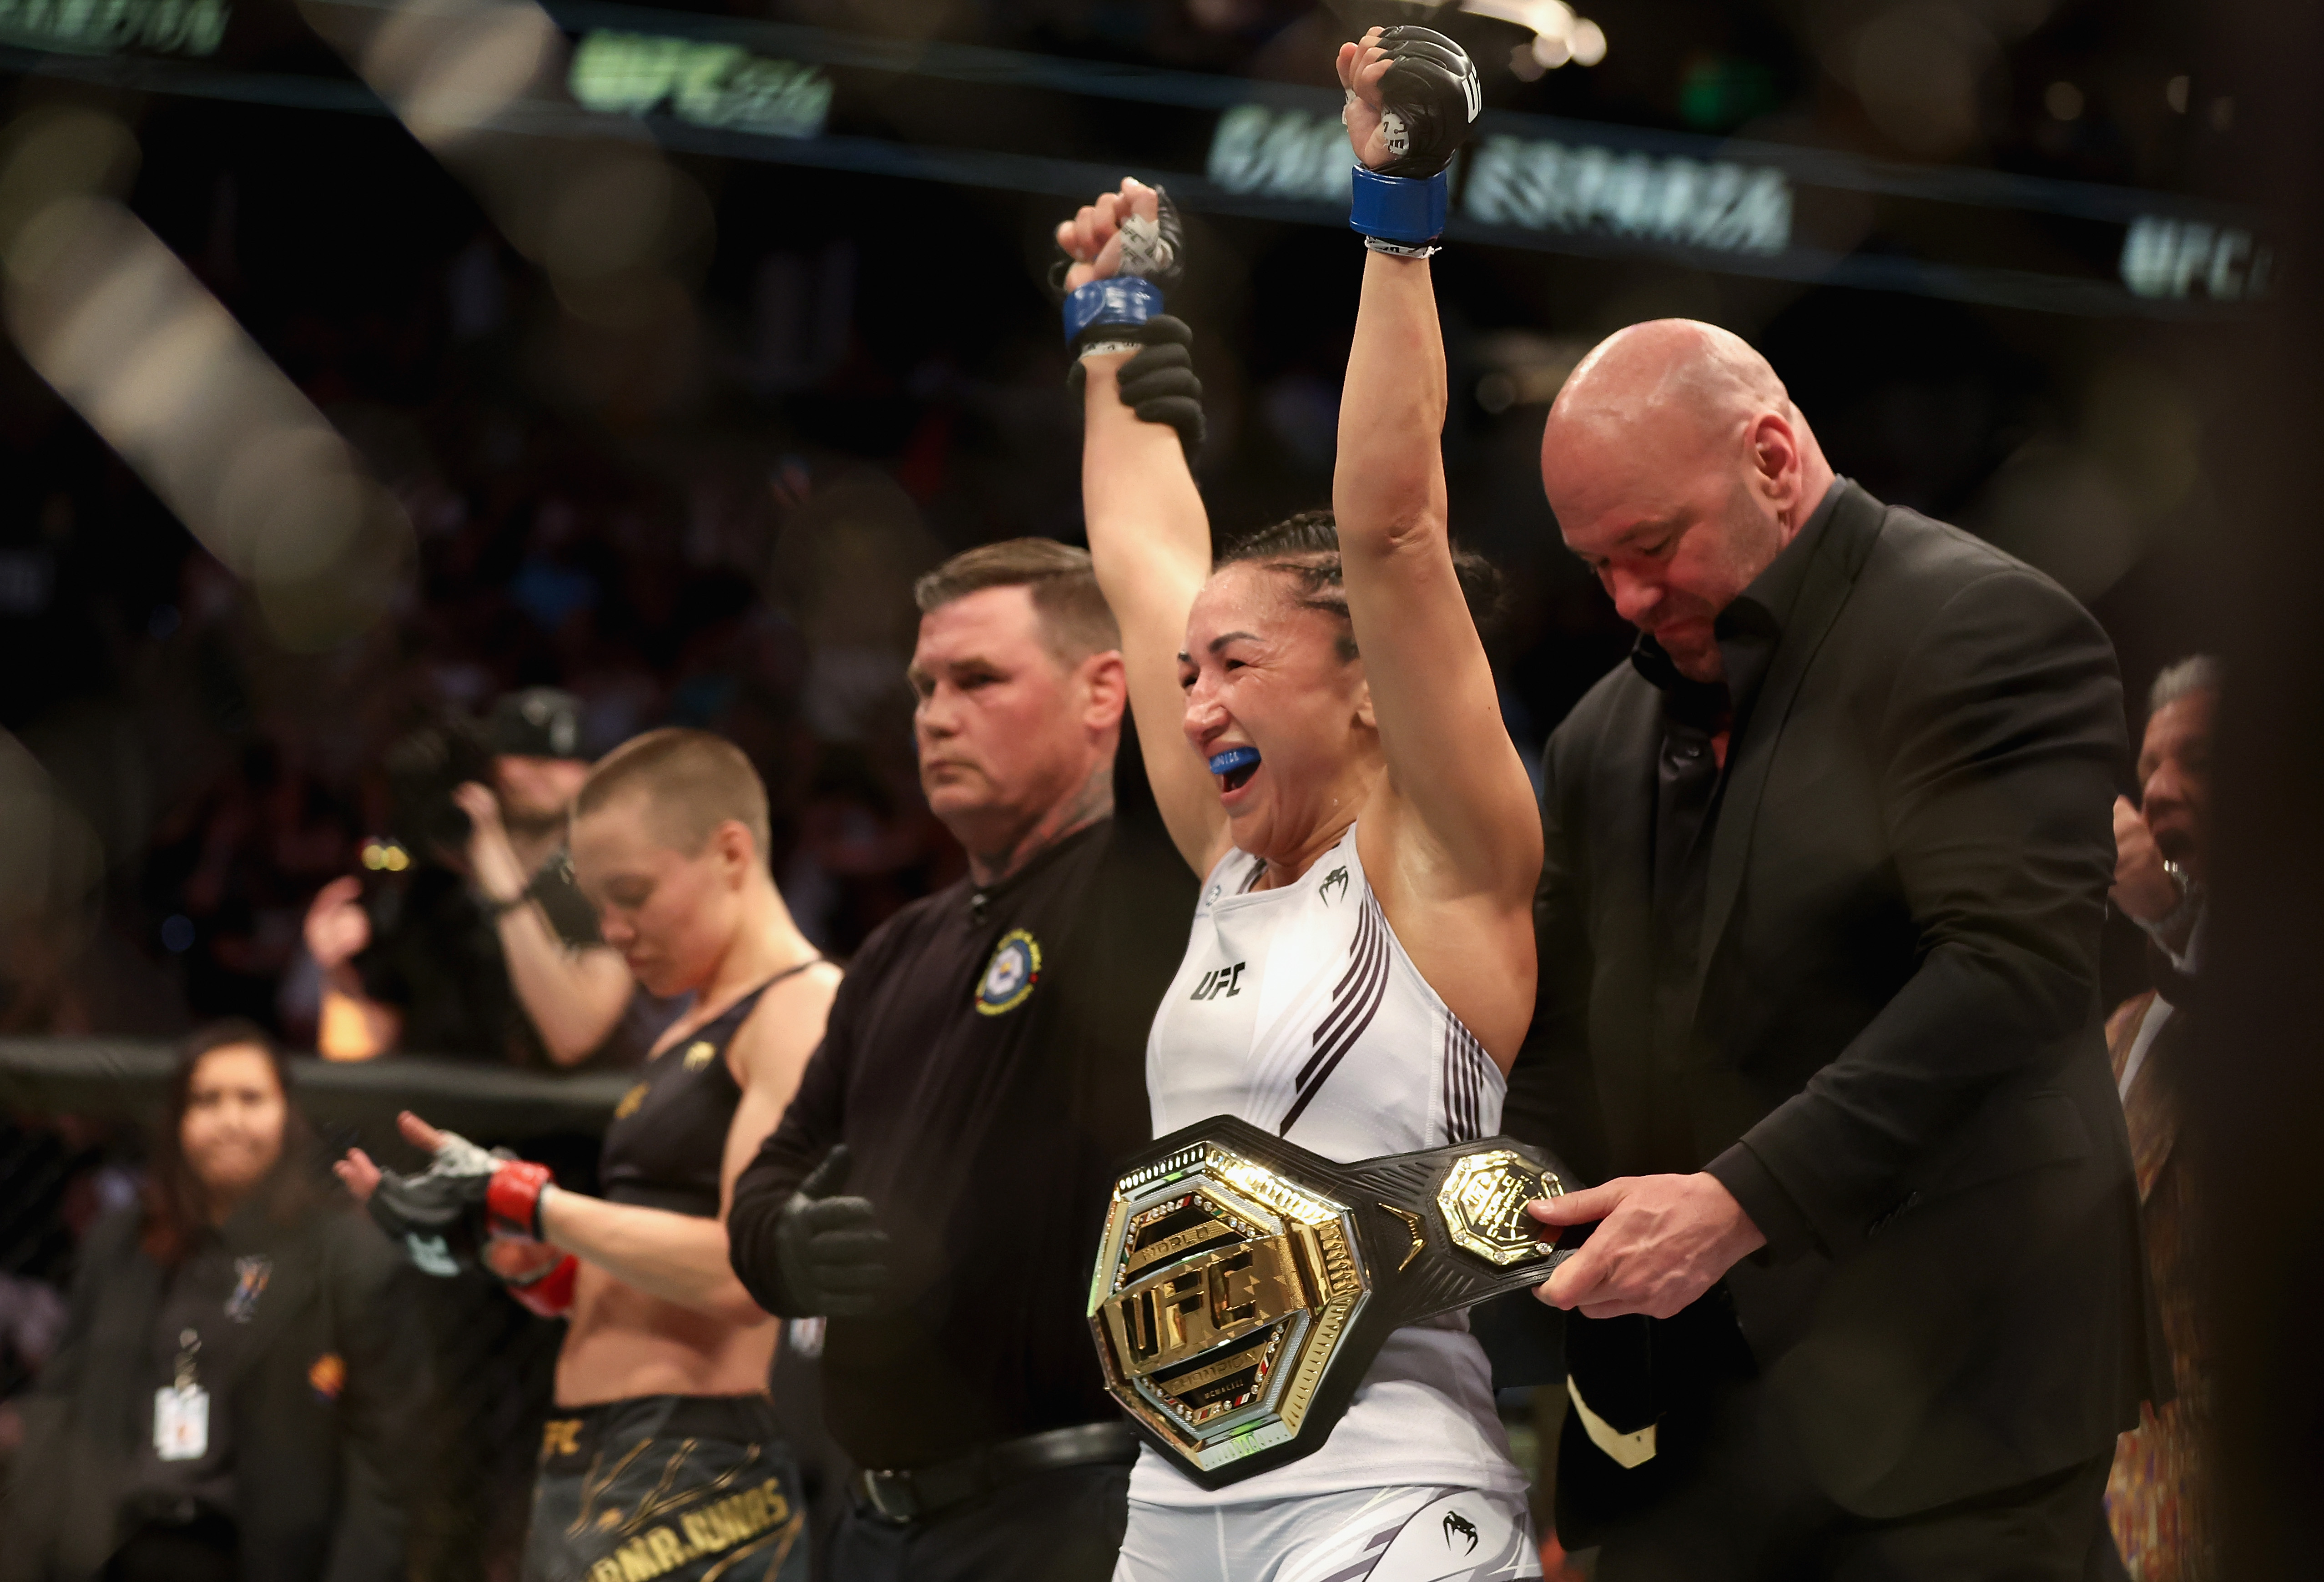 Carla Esparza defeated Rose Namajunas by split decision at UFC 274